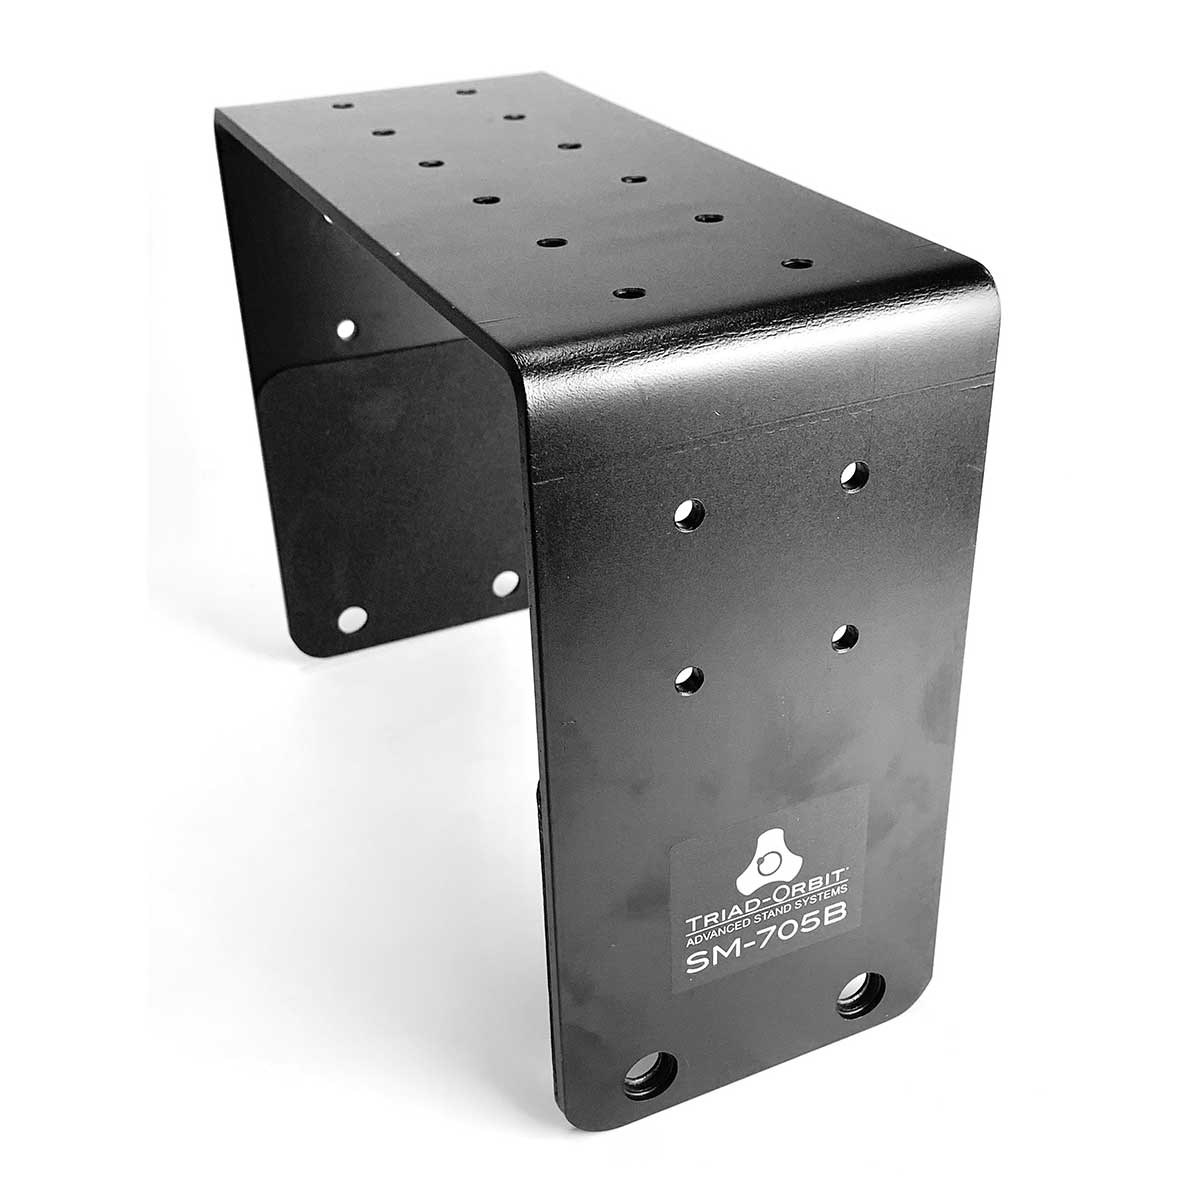 Triad-Orbit SM-705B Speaker Mounting Bracket for JBL 705P Powered Speaker